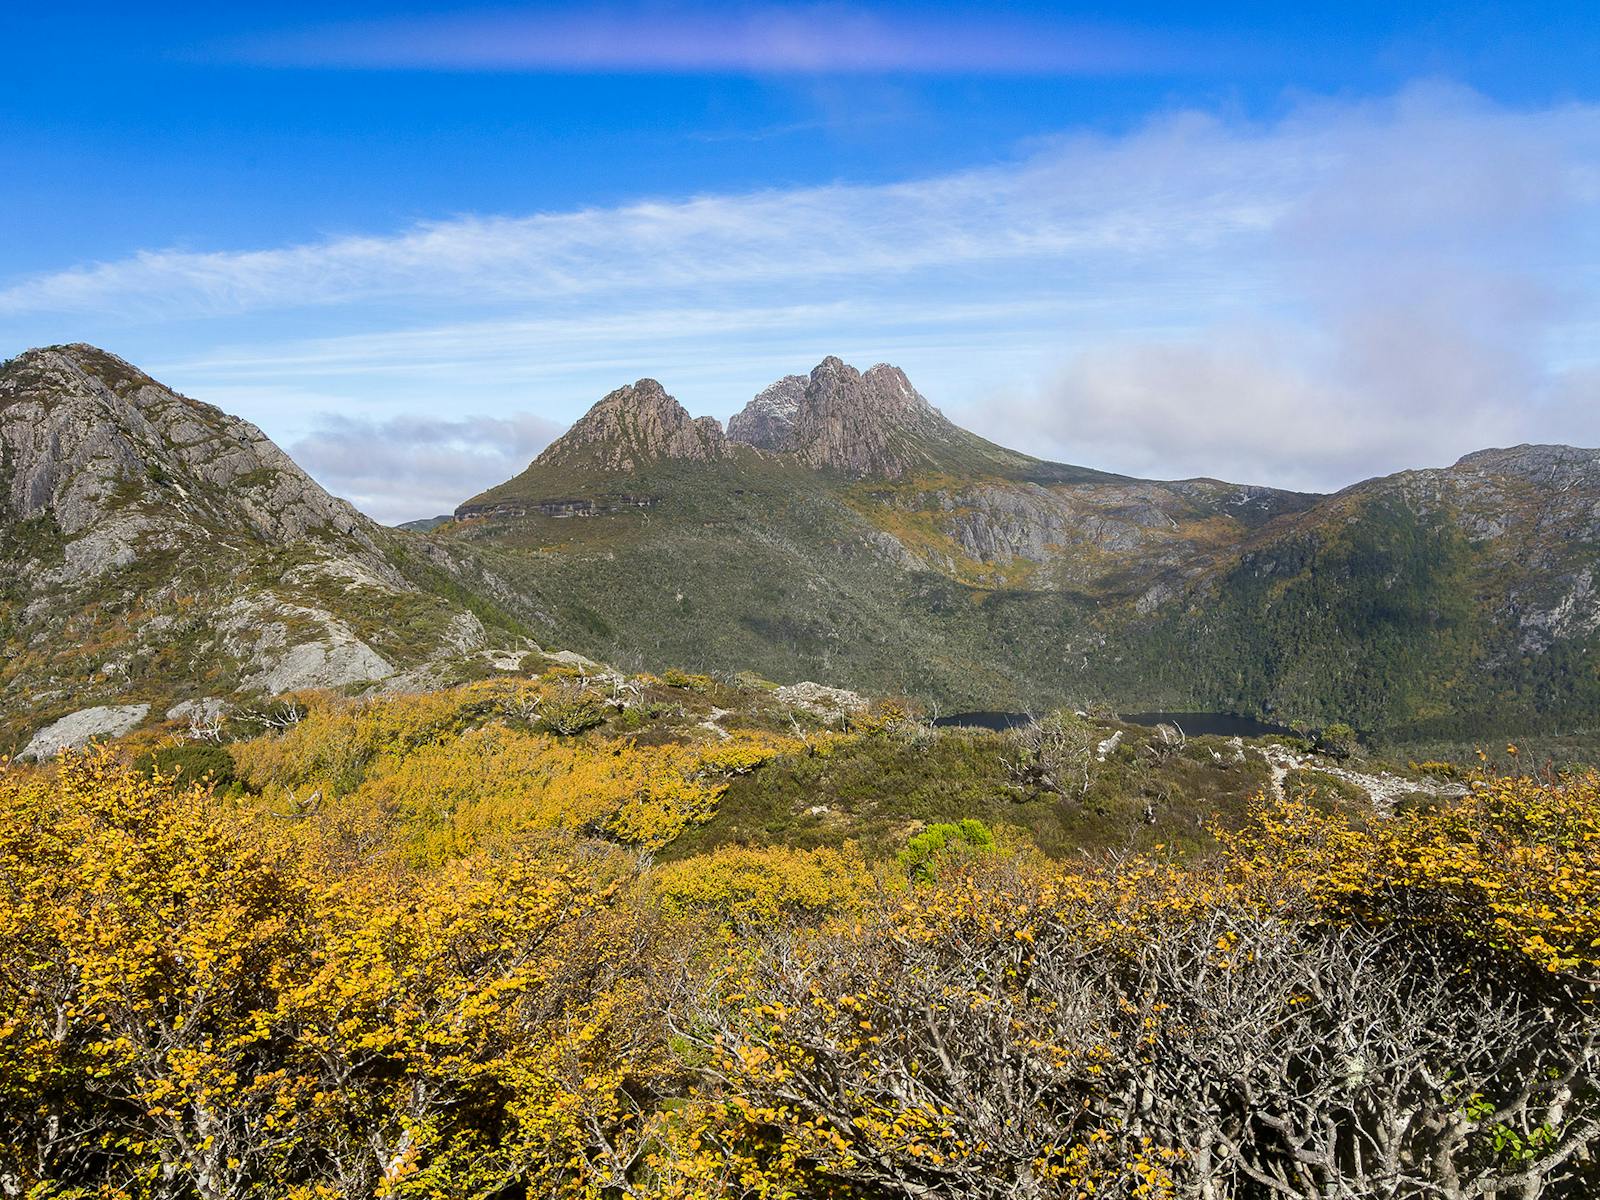 Autumn scene at Cradle Mountain, Tasmania